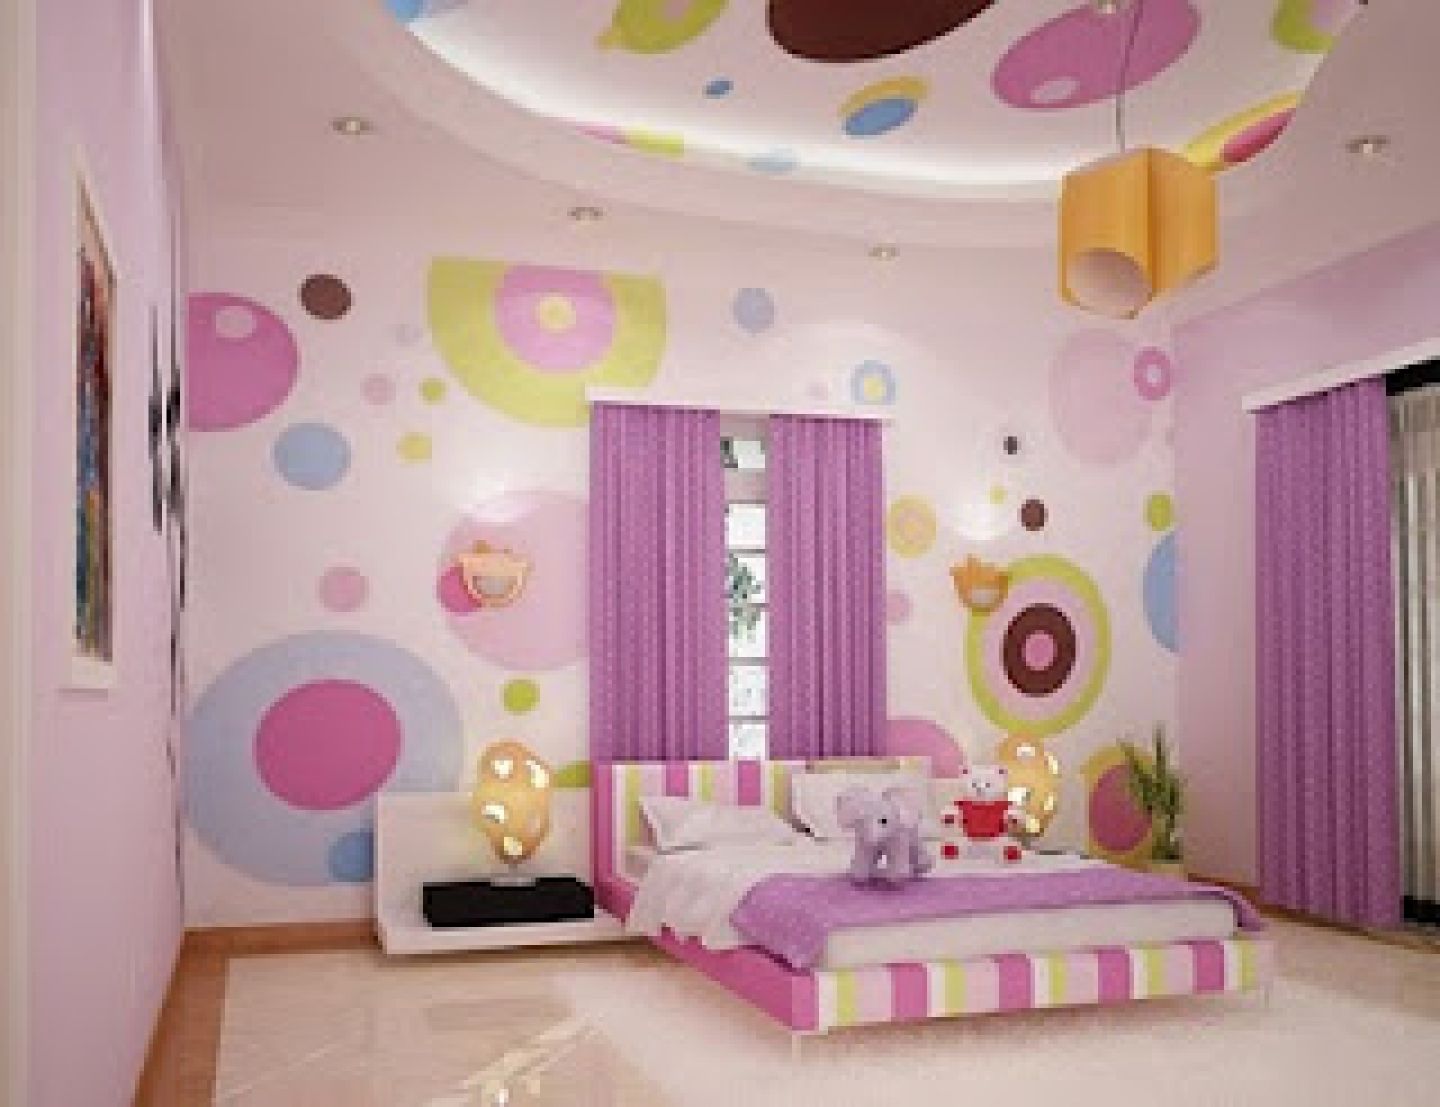 Polcadote Purple Girl Bedroom Design